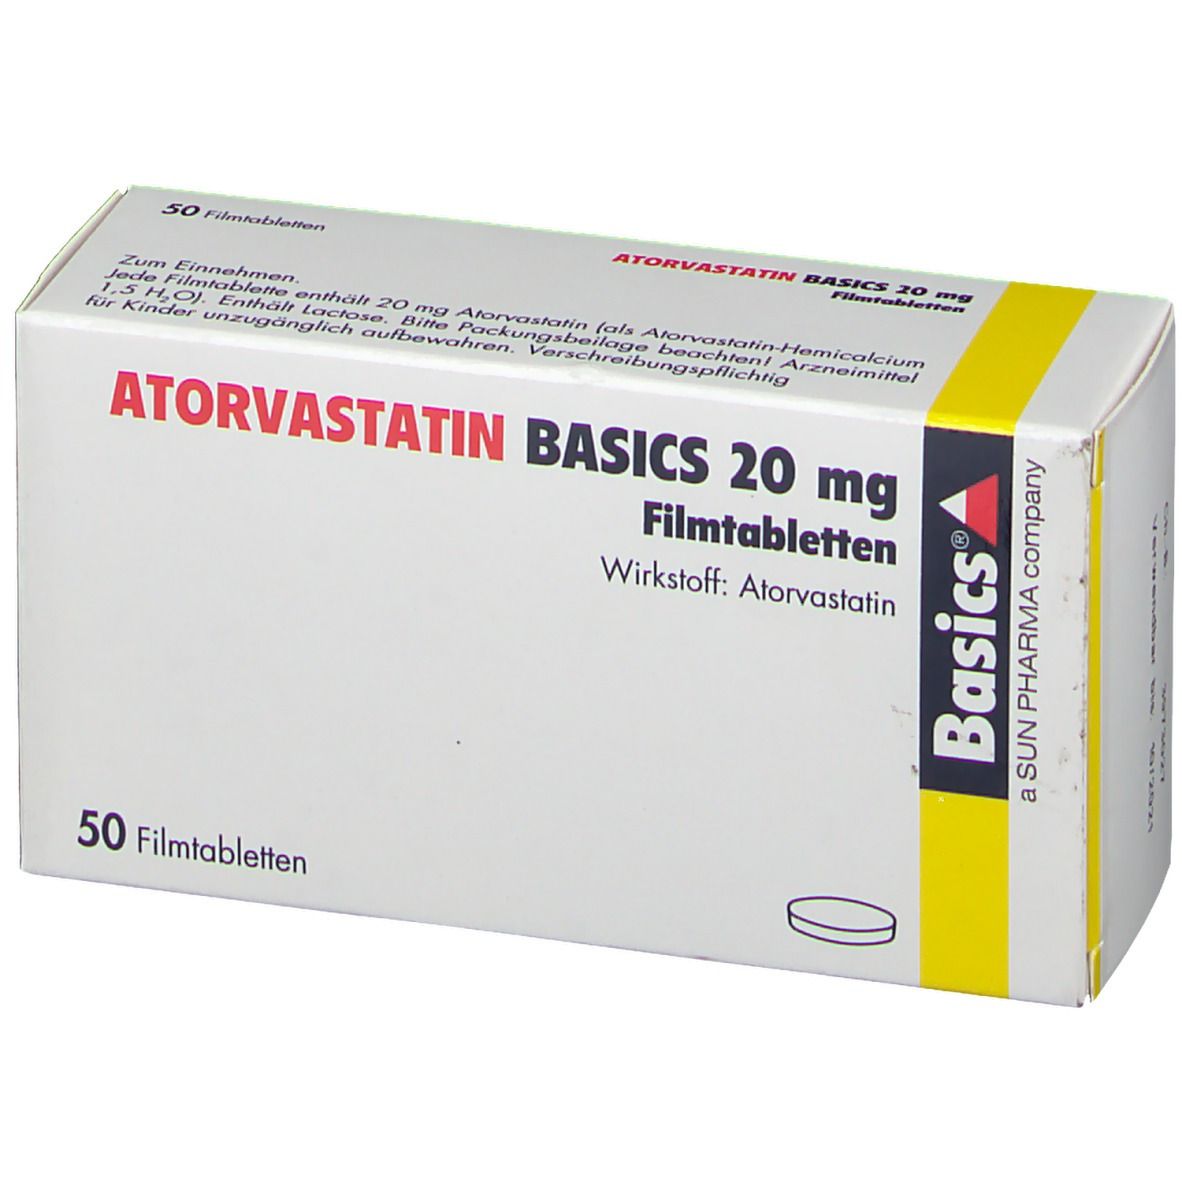 ATORVASTATIN BASICS 20 mg